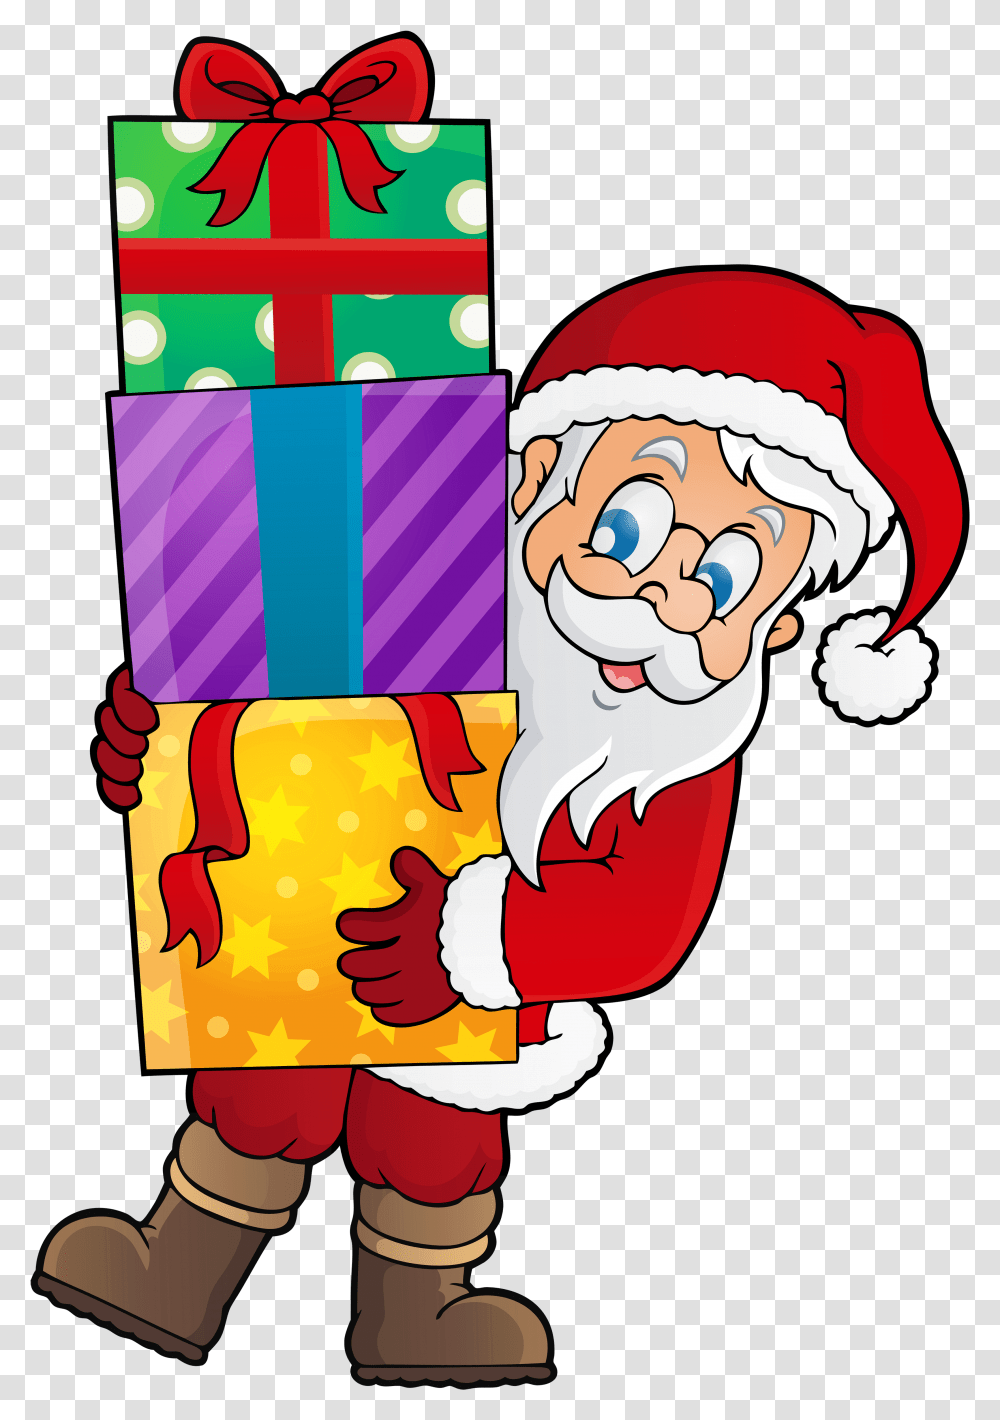 Santa With Presents Clipart Santa With Presents Clipart, Hand, Elf, Fist, Poster Transparent Png